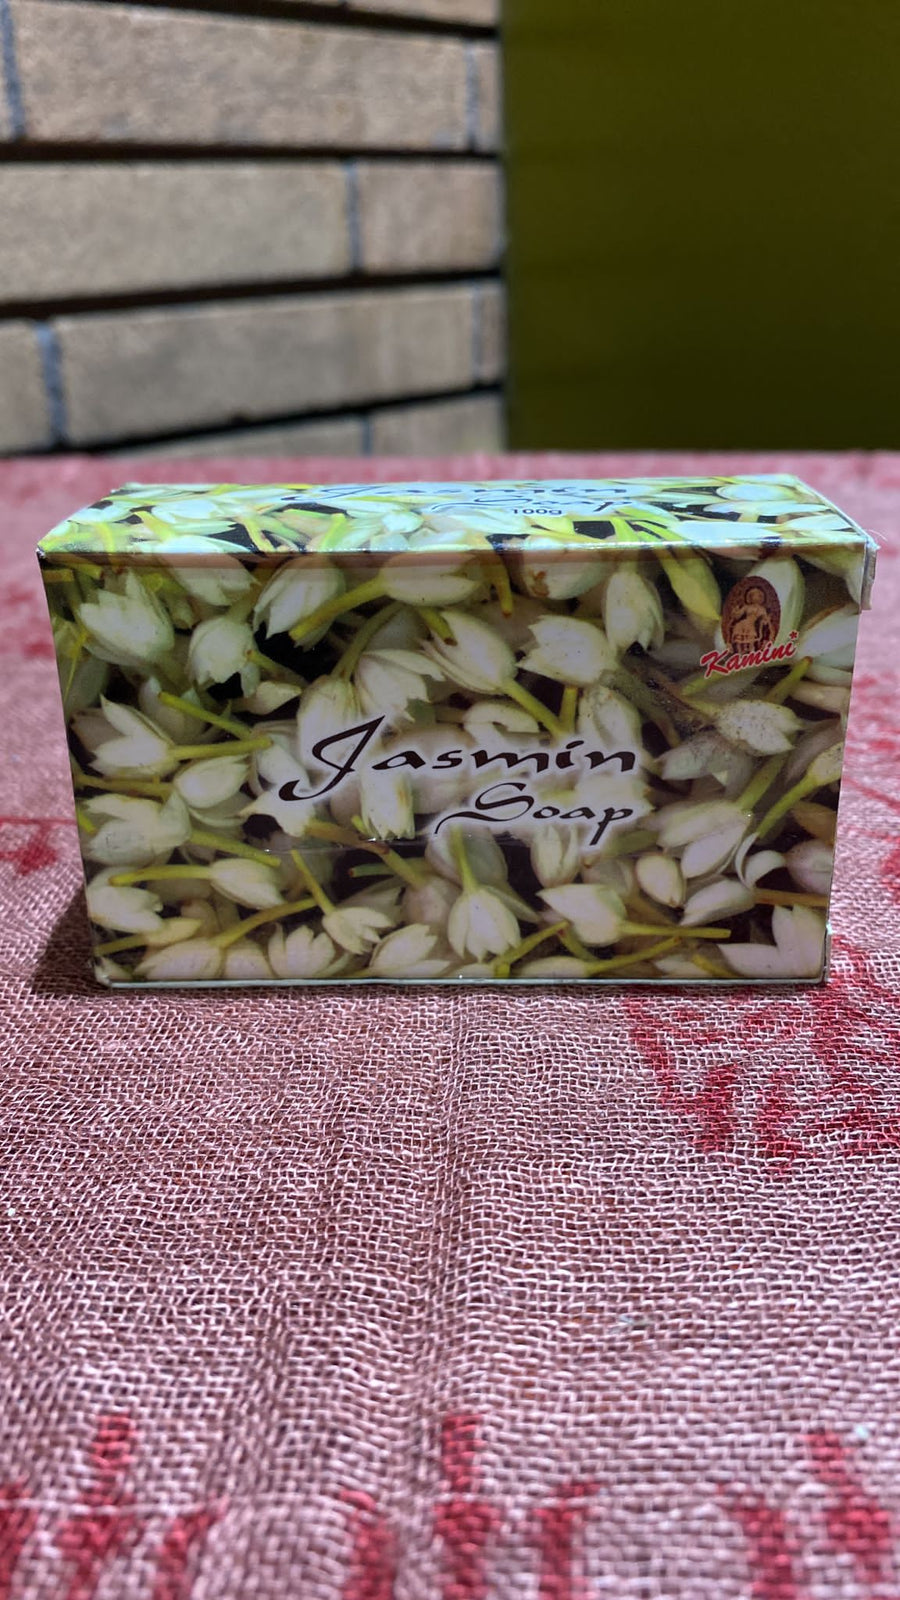 jasmine soap